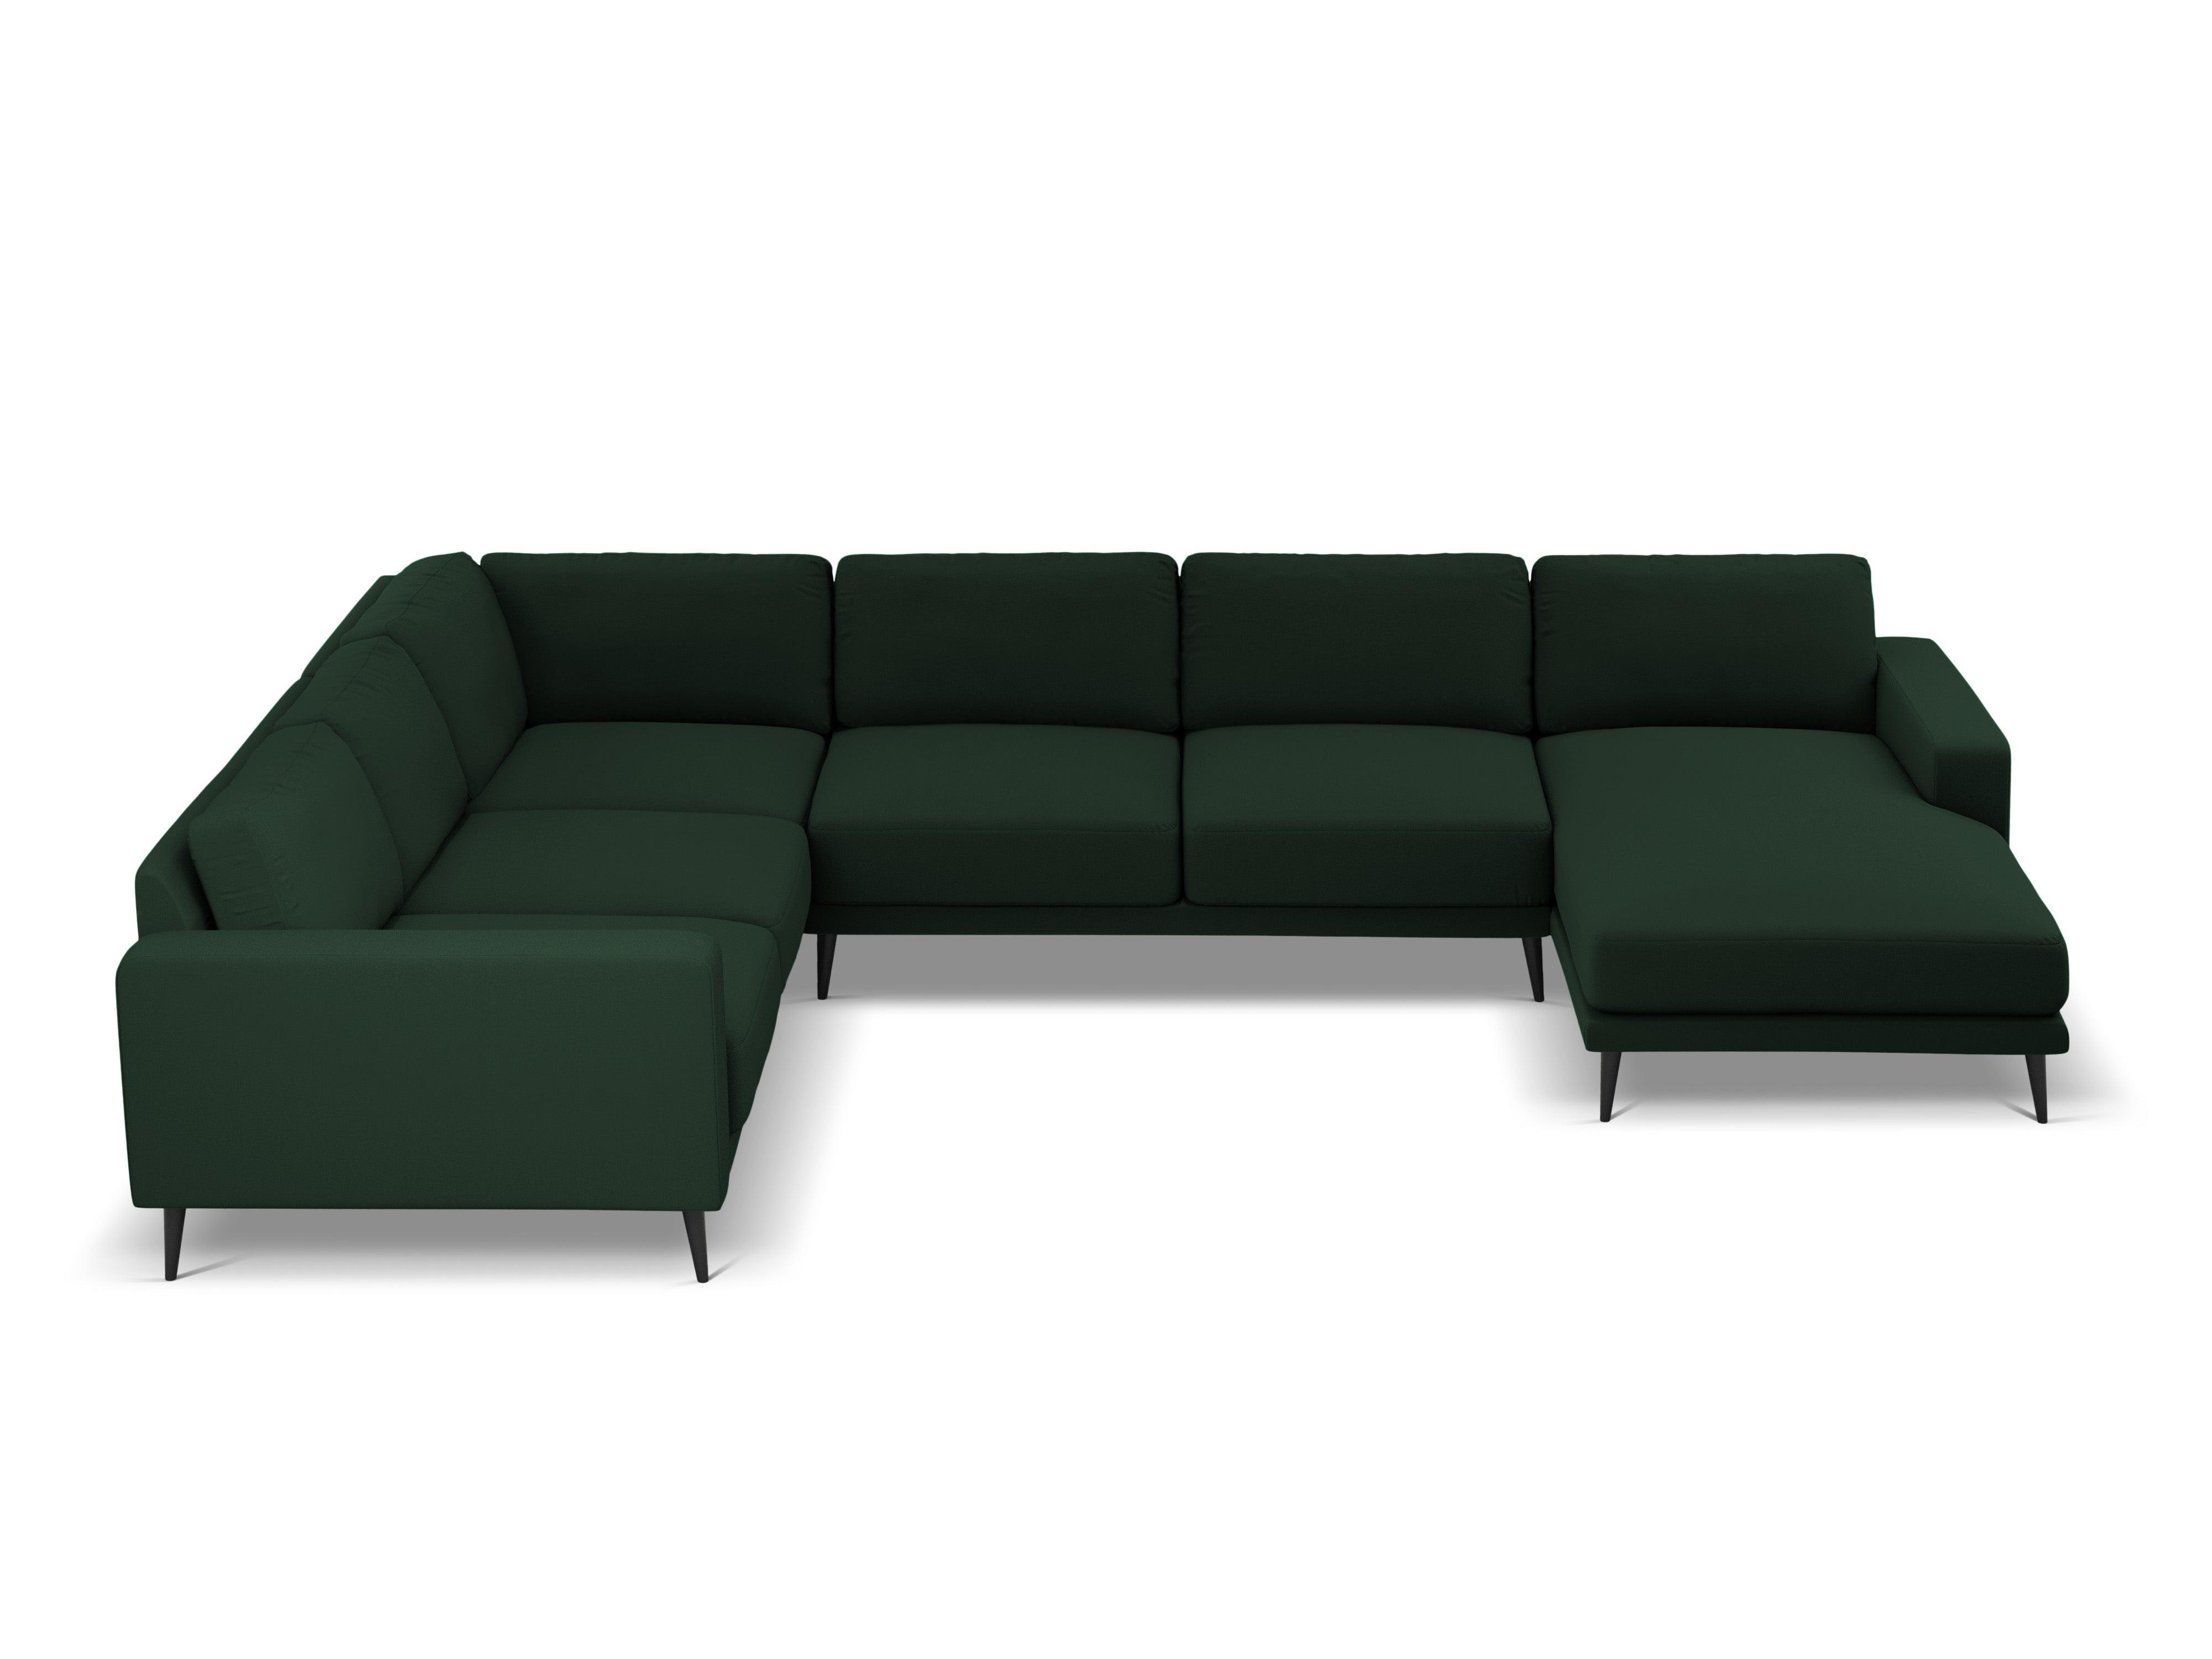 Panoramic Left Corner Sofa, "Kylie", 7 Seats, 306x236x80
Made in Europe, Micadoni, Eye on Design